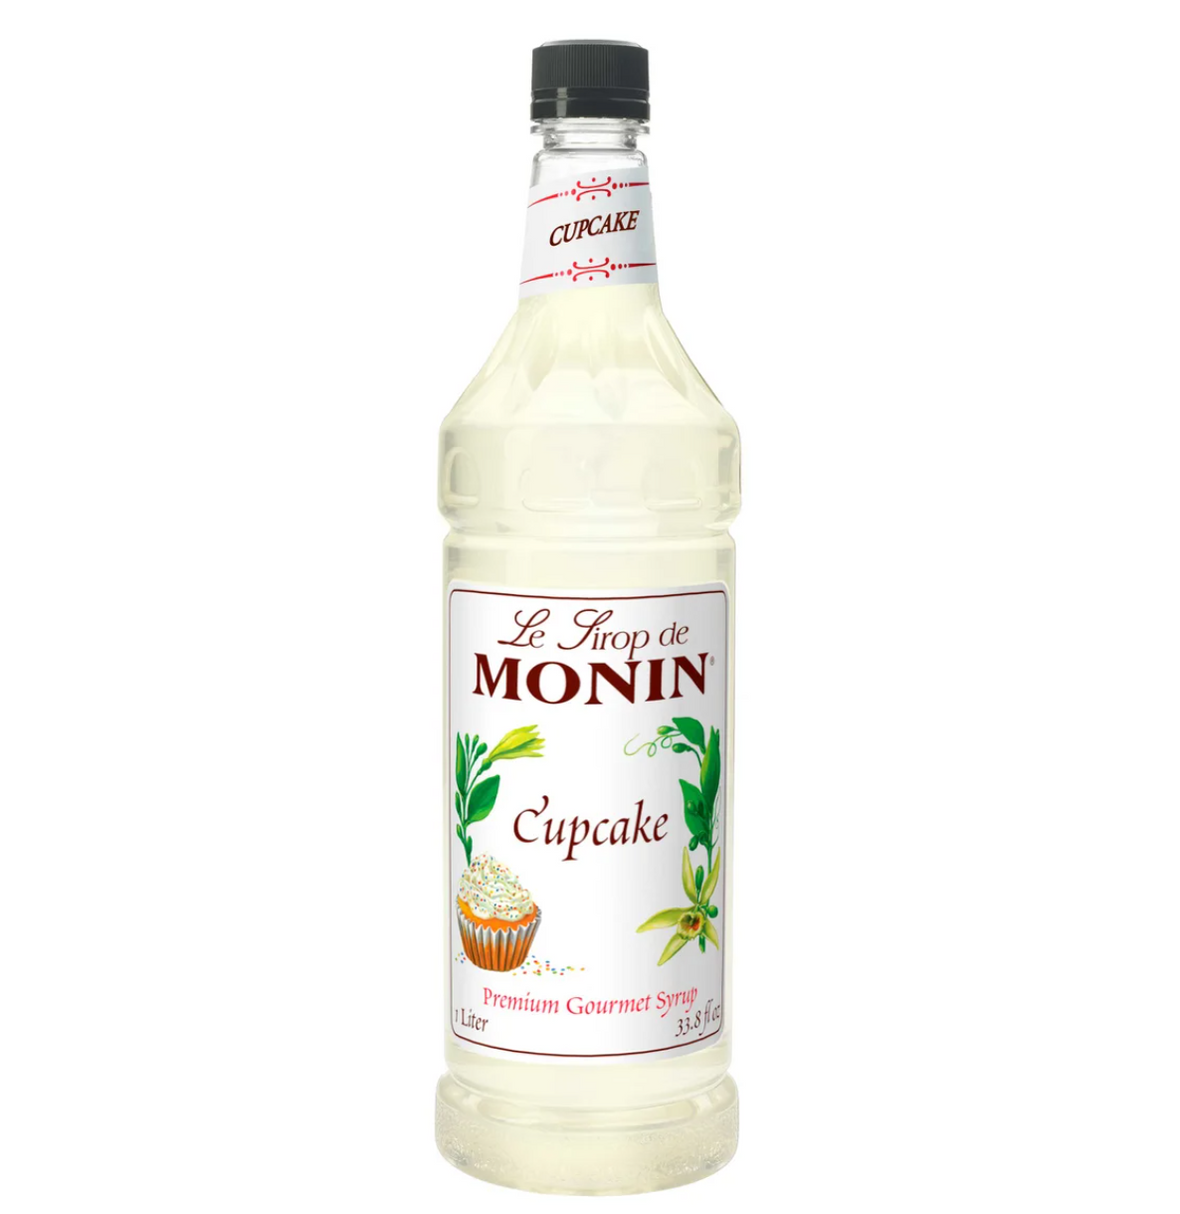 Monin Cupcake Flavored Syrup